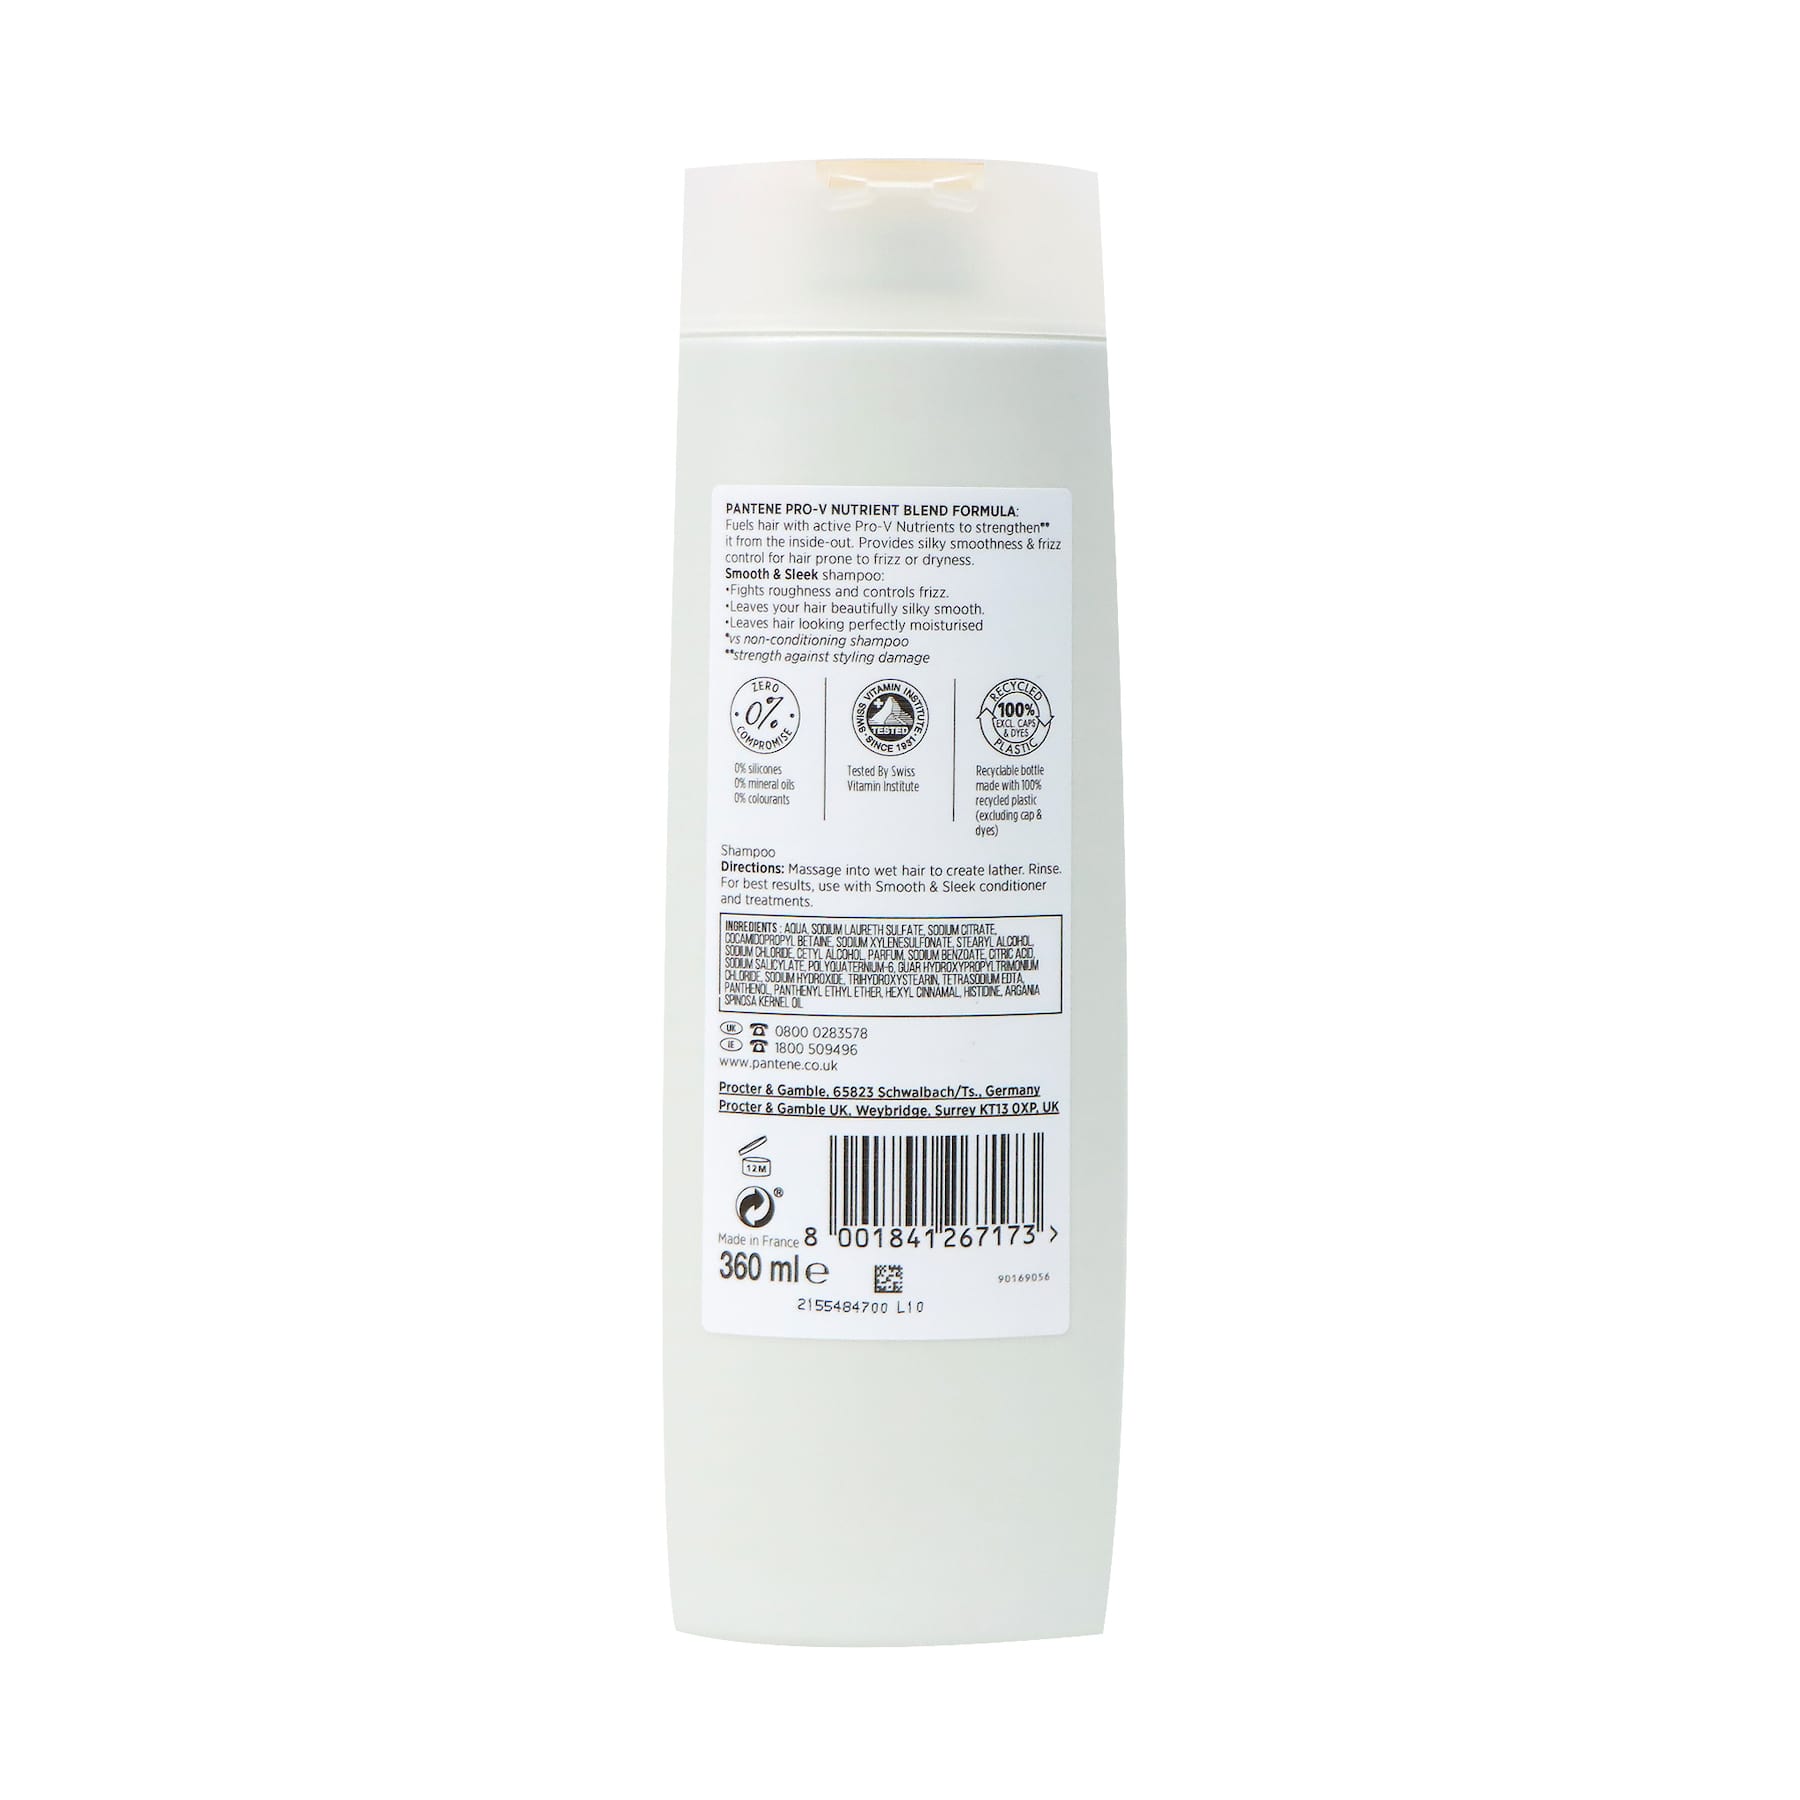 Pantene Active Pro-V Smooth & Sleek Shampoo 360ml